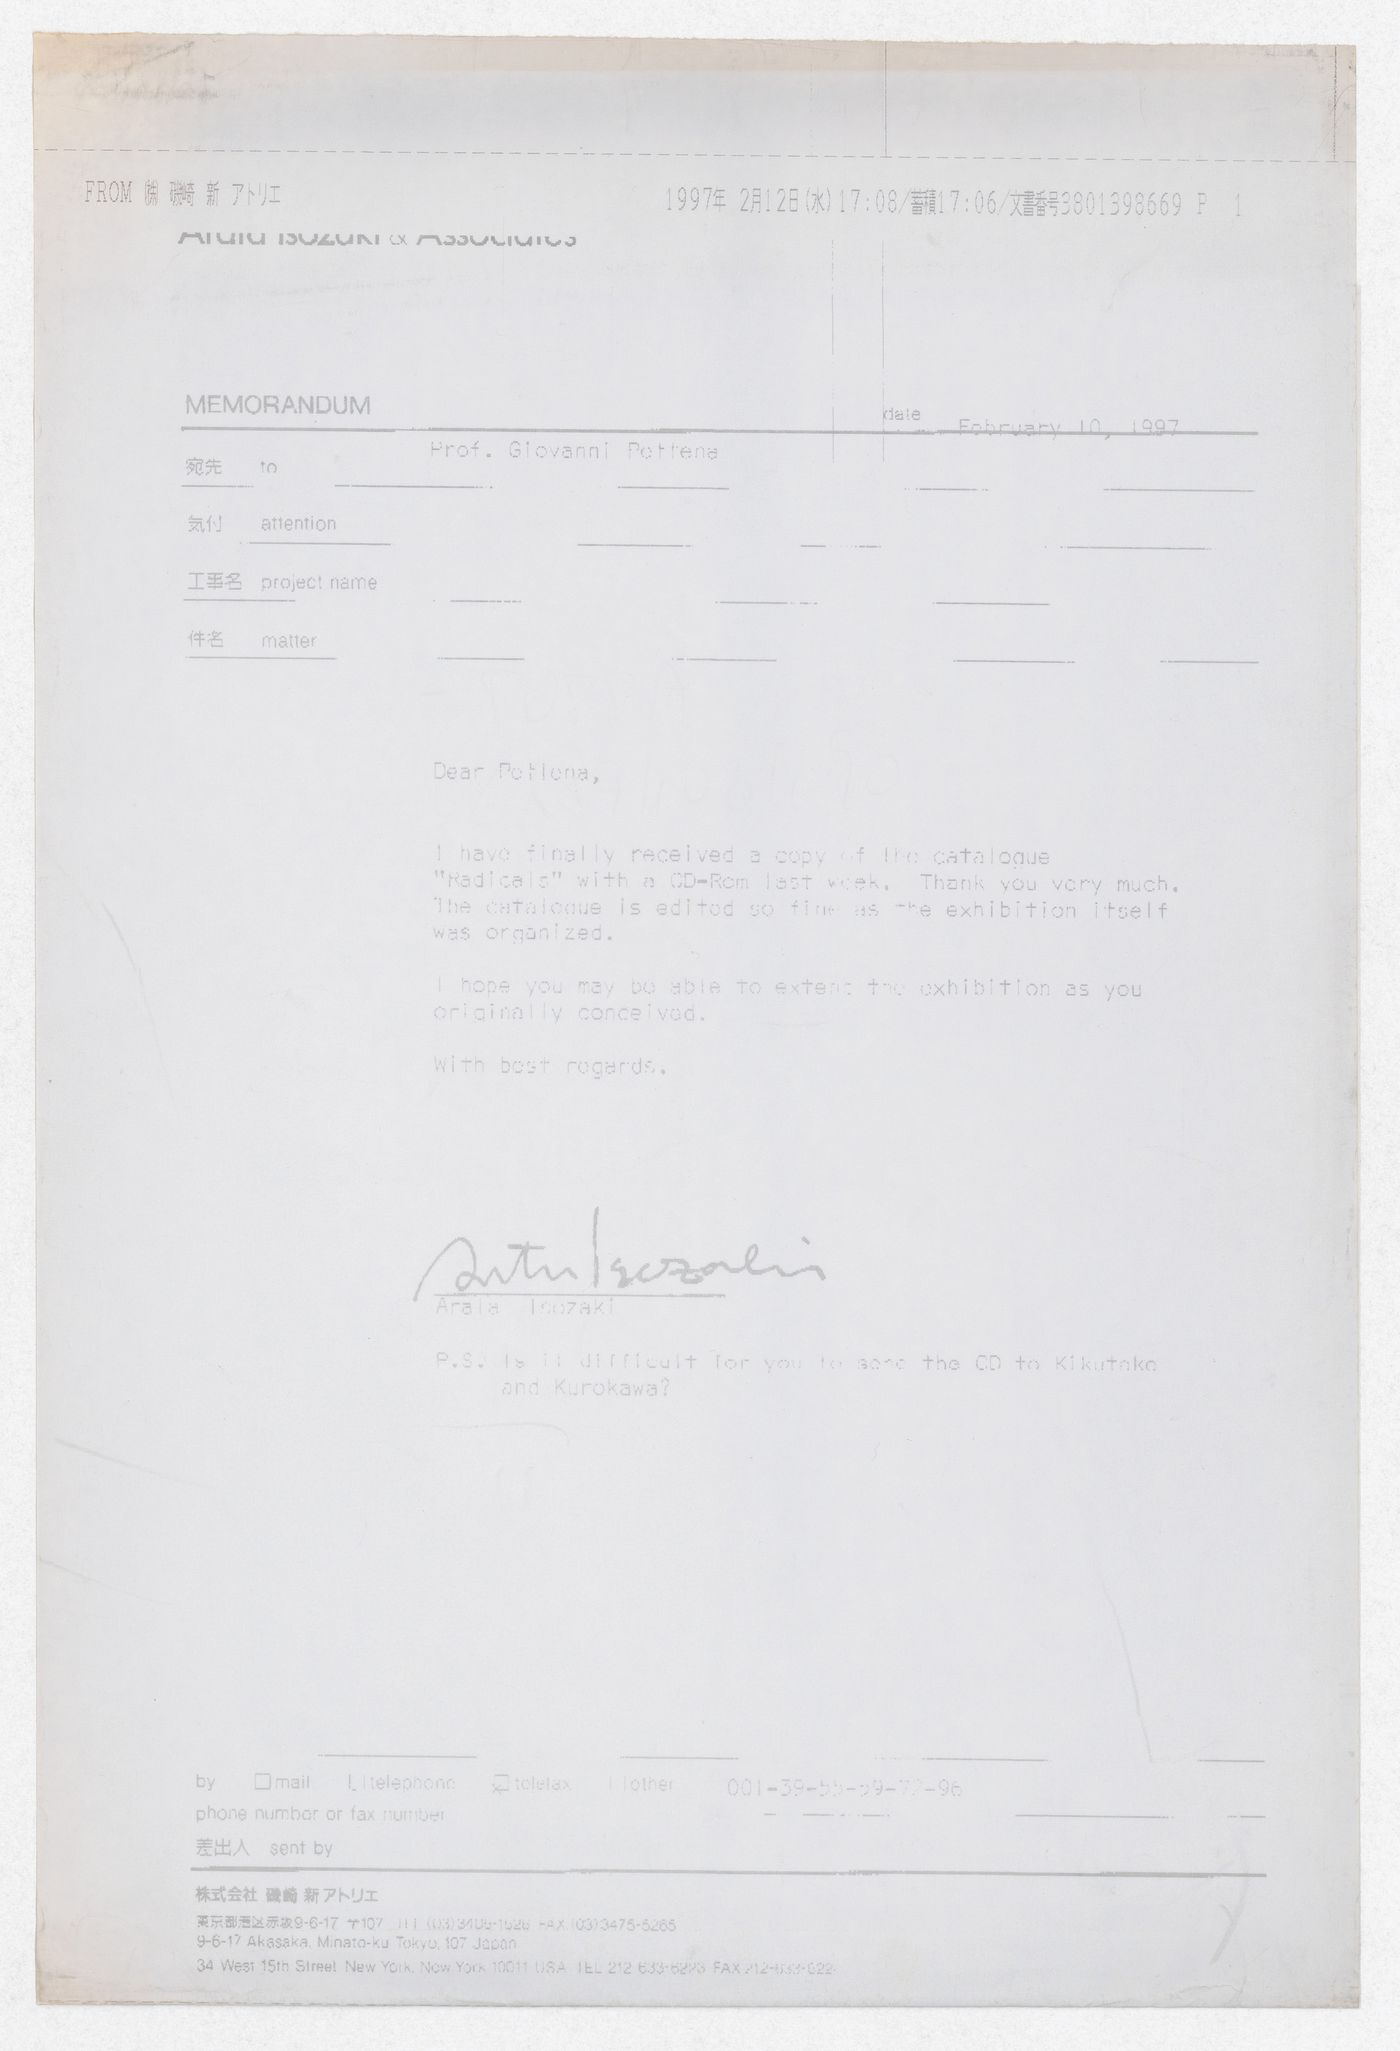 Correspondence from Arata Isozaki regarding Radicals. Architecttura e Design 1960-1975 exhibition materials